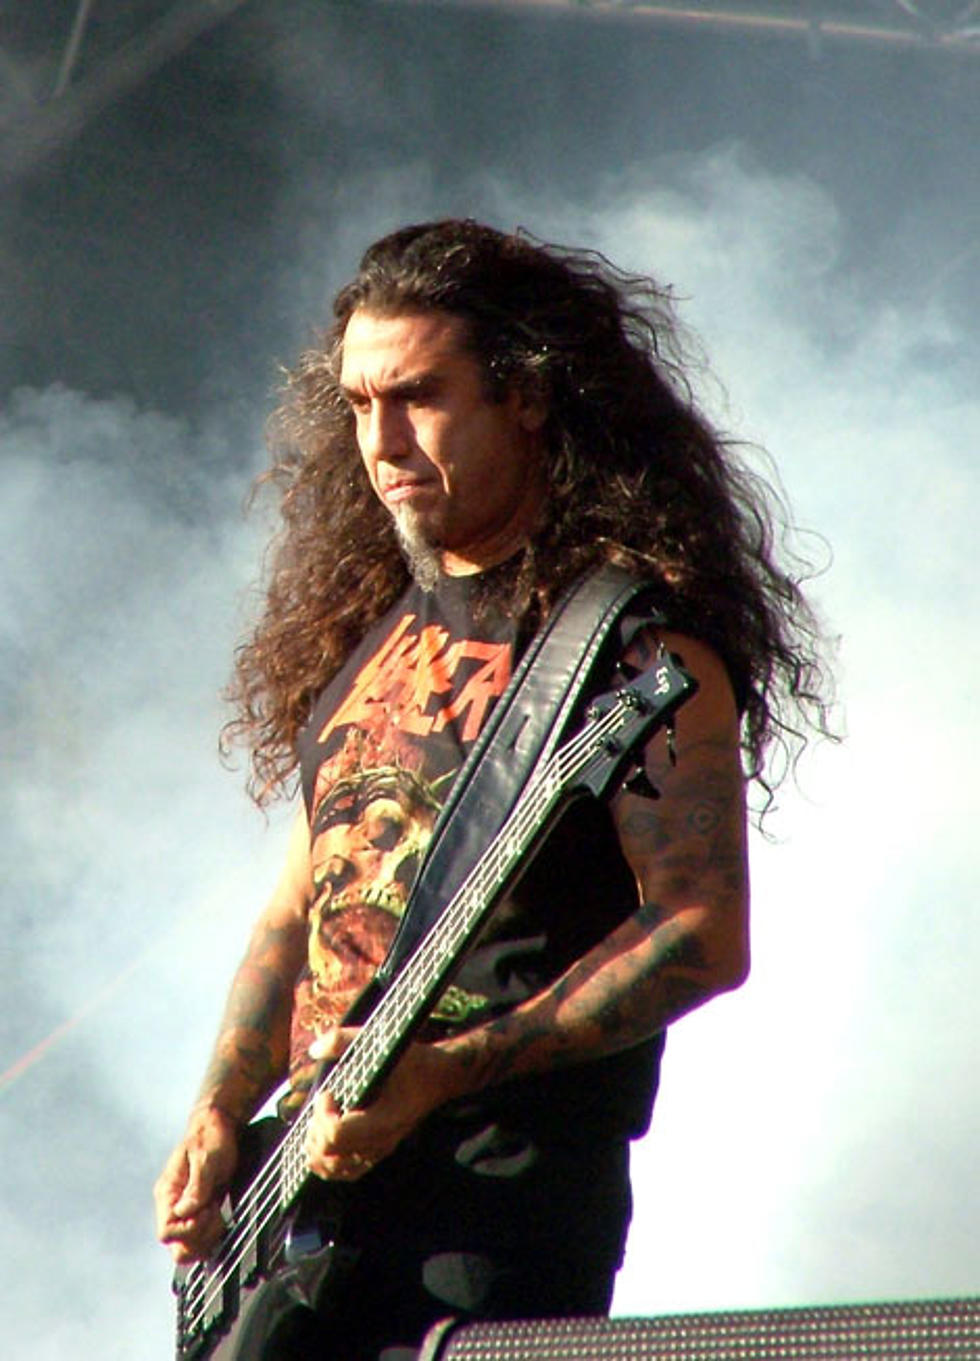 Slayer postpones tour dates, Araya getting back surgery